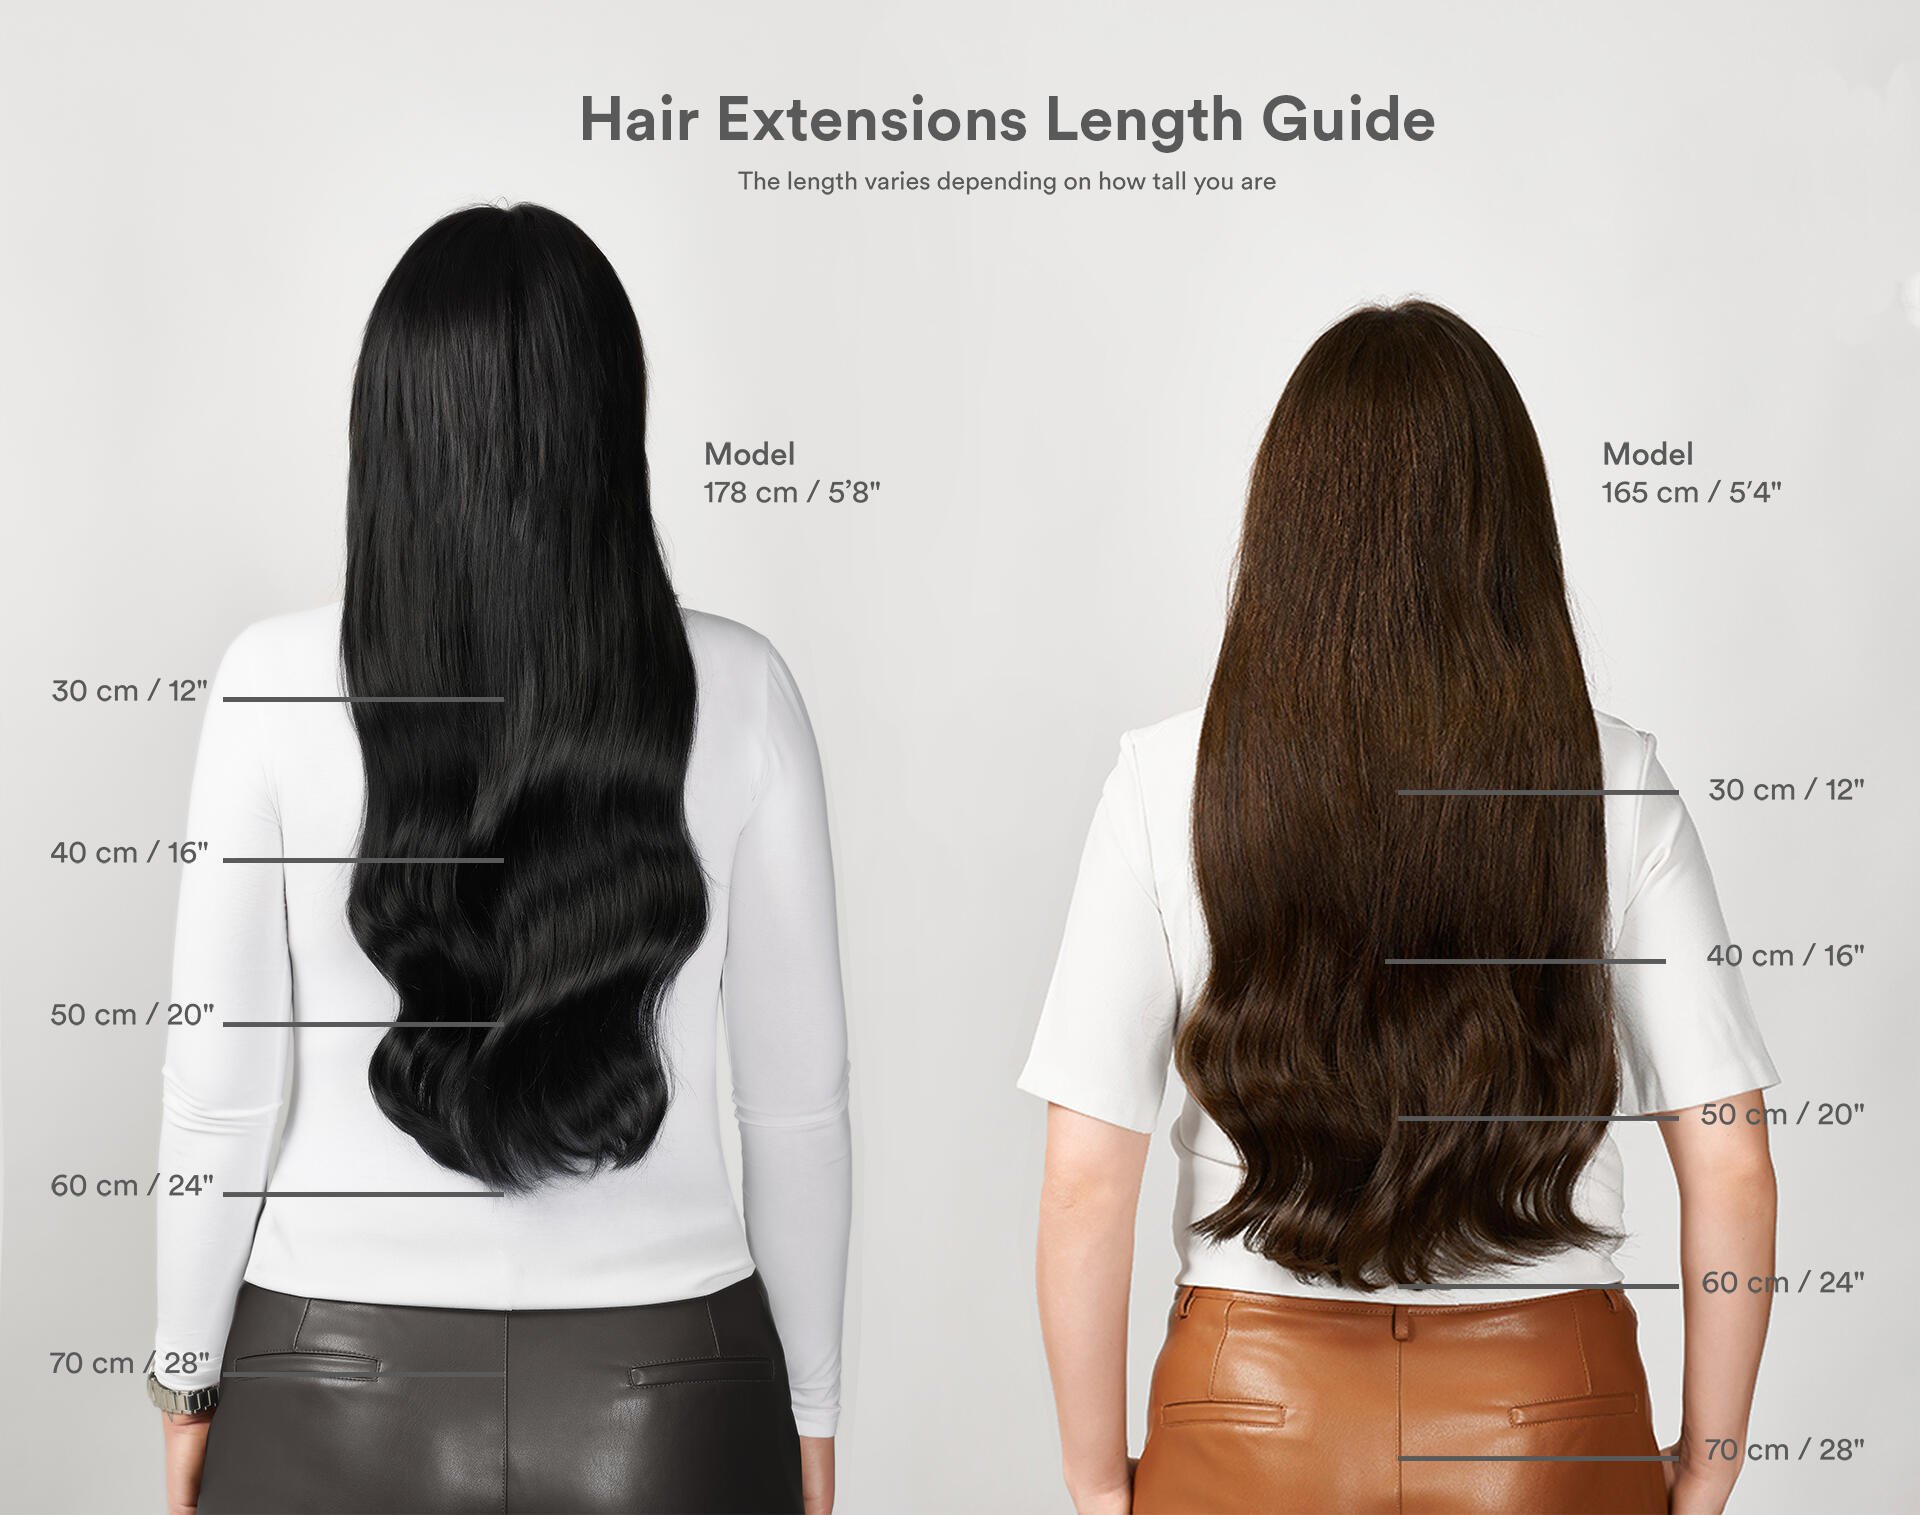 40cm hair extensions